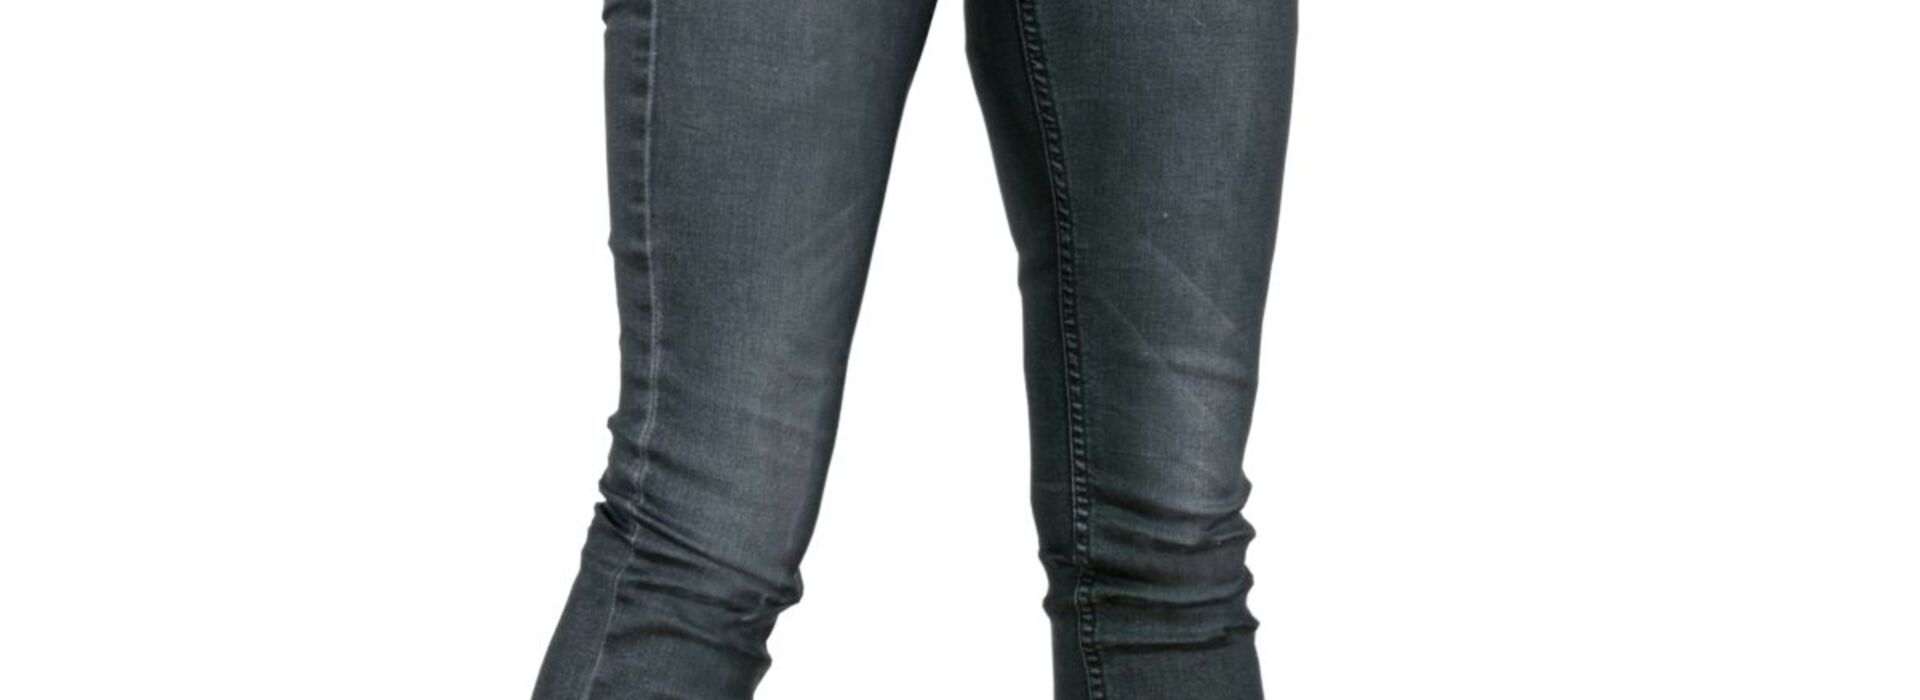 Trousers Jeans Grey women Pants - FlippedNormals